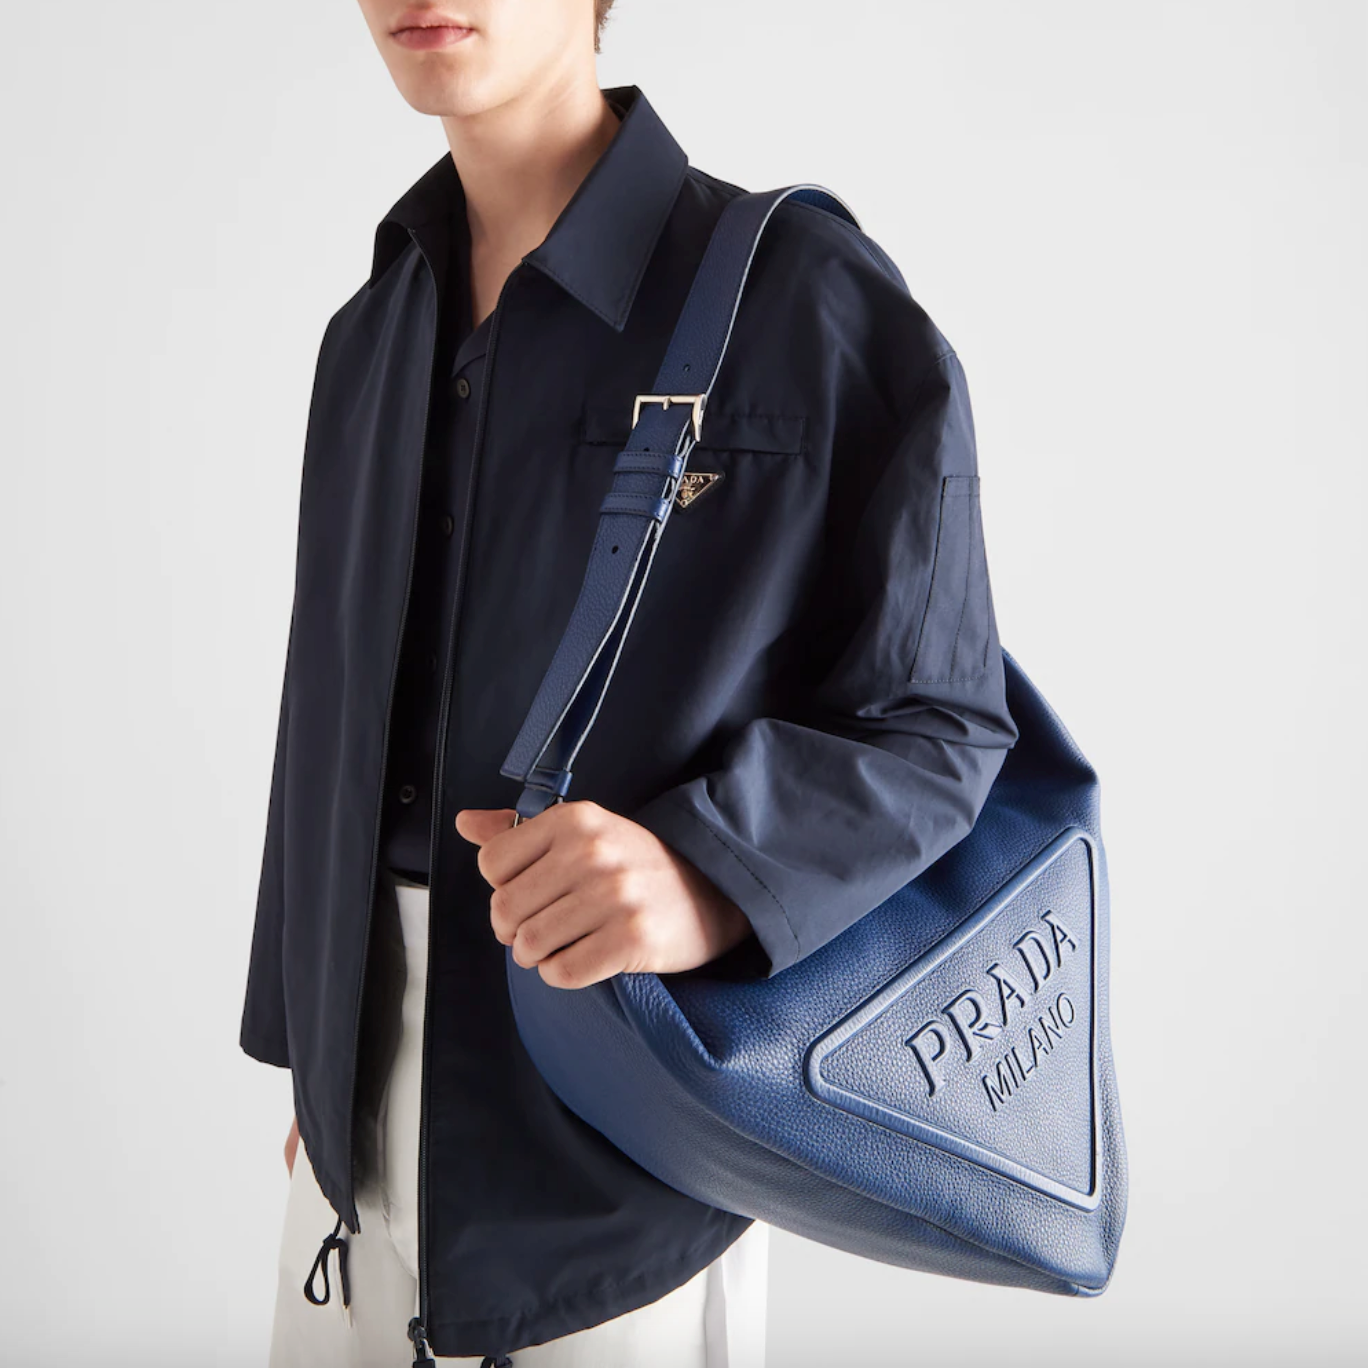 Bag of the Week: Prada Cahier Bag – The Luxury Closet